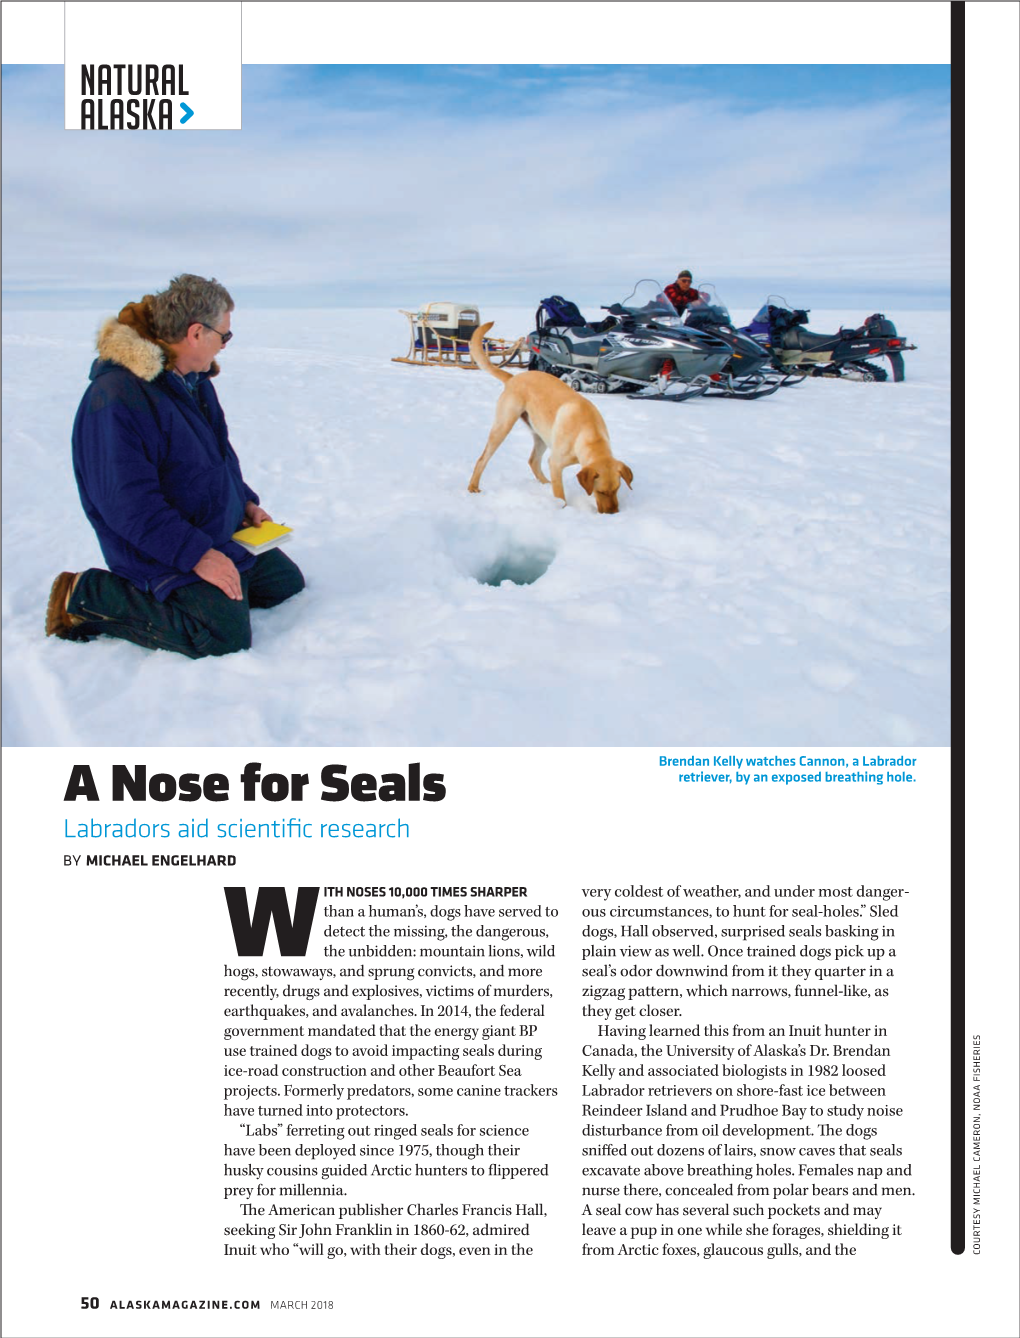 A Nose for Seals in Alaska, 2018